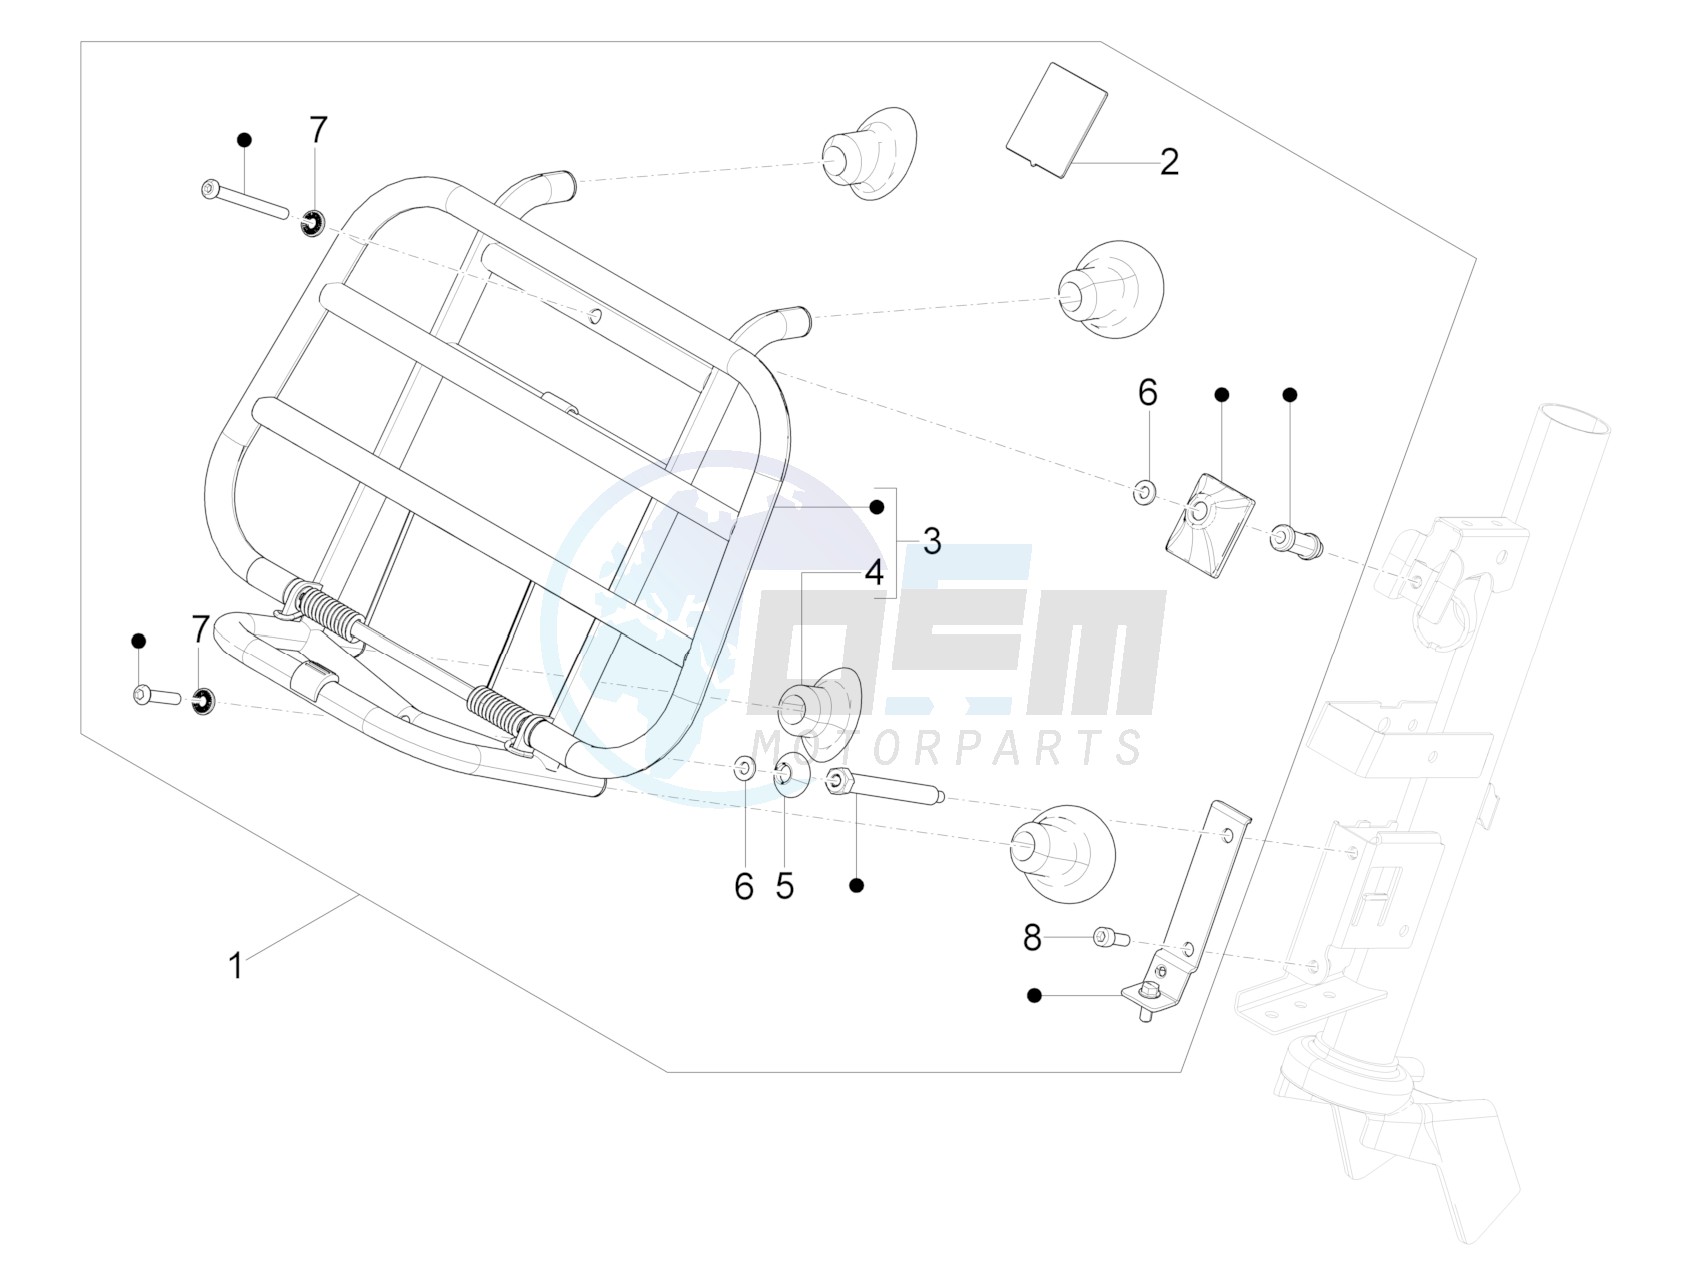 Front luggage rack blueprint